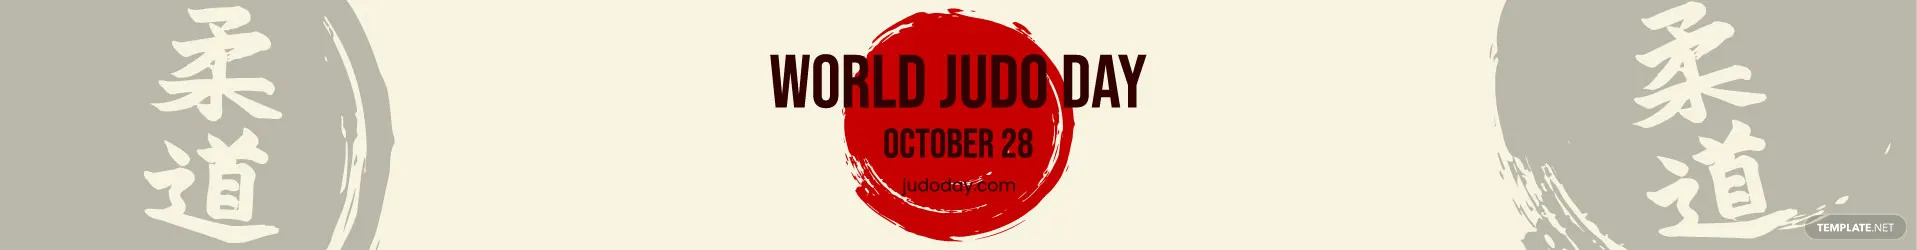 world judo day website banner ideas examples